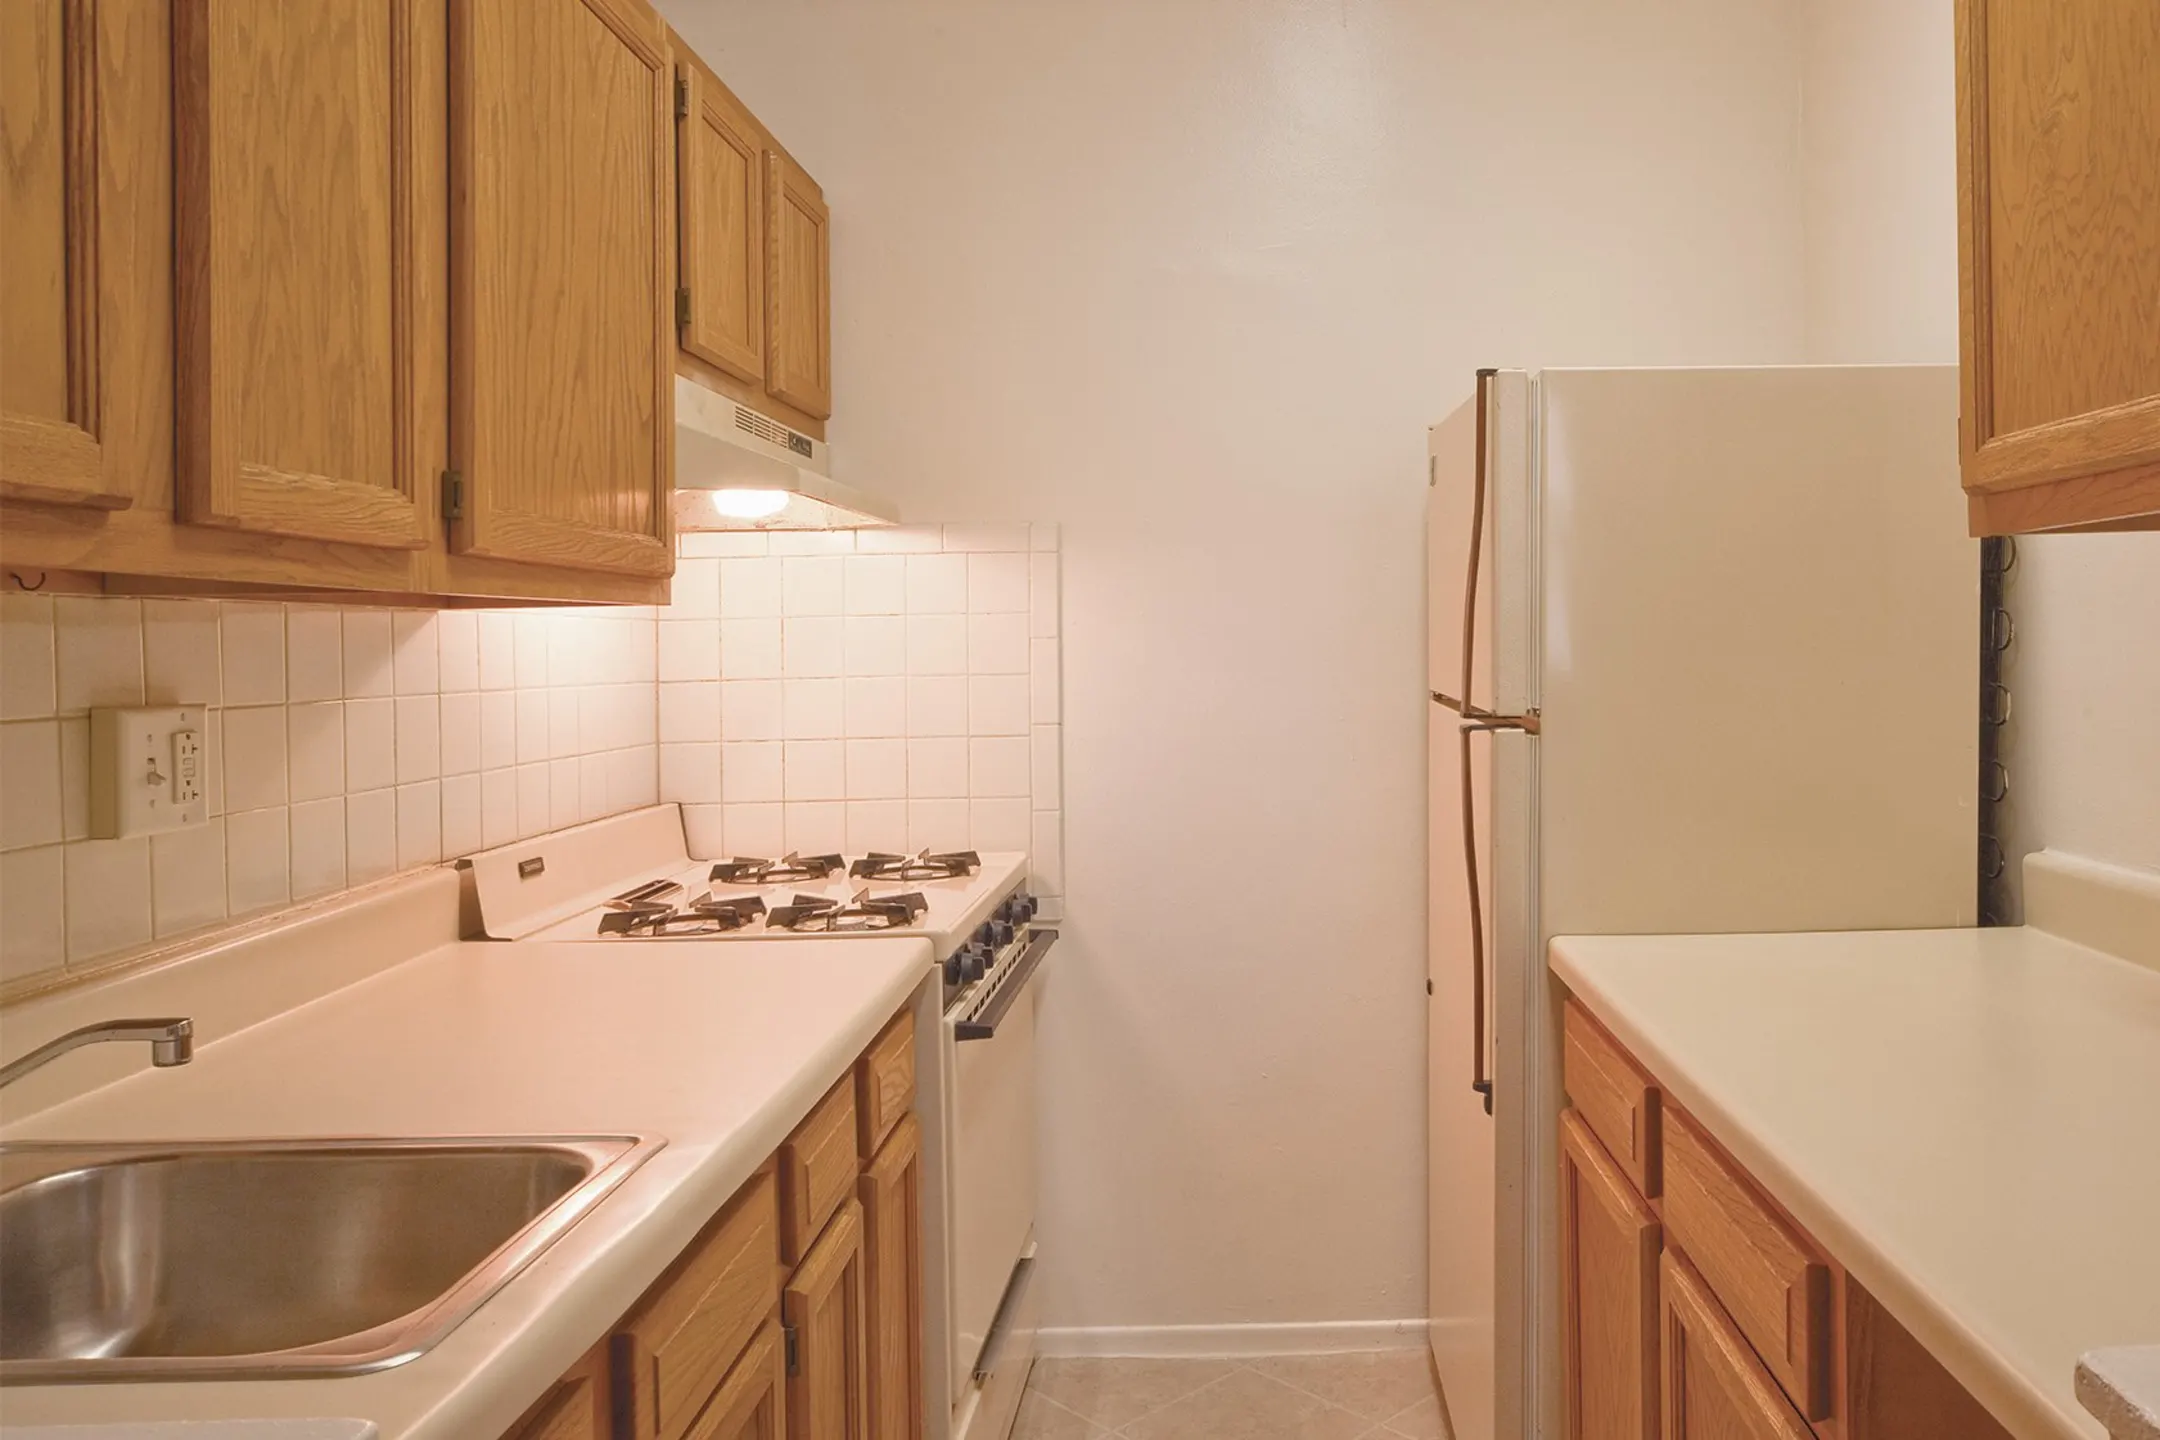 Kitchen - Chestnut Hall Apartments - Philadelphia, PA